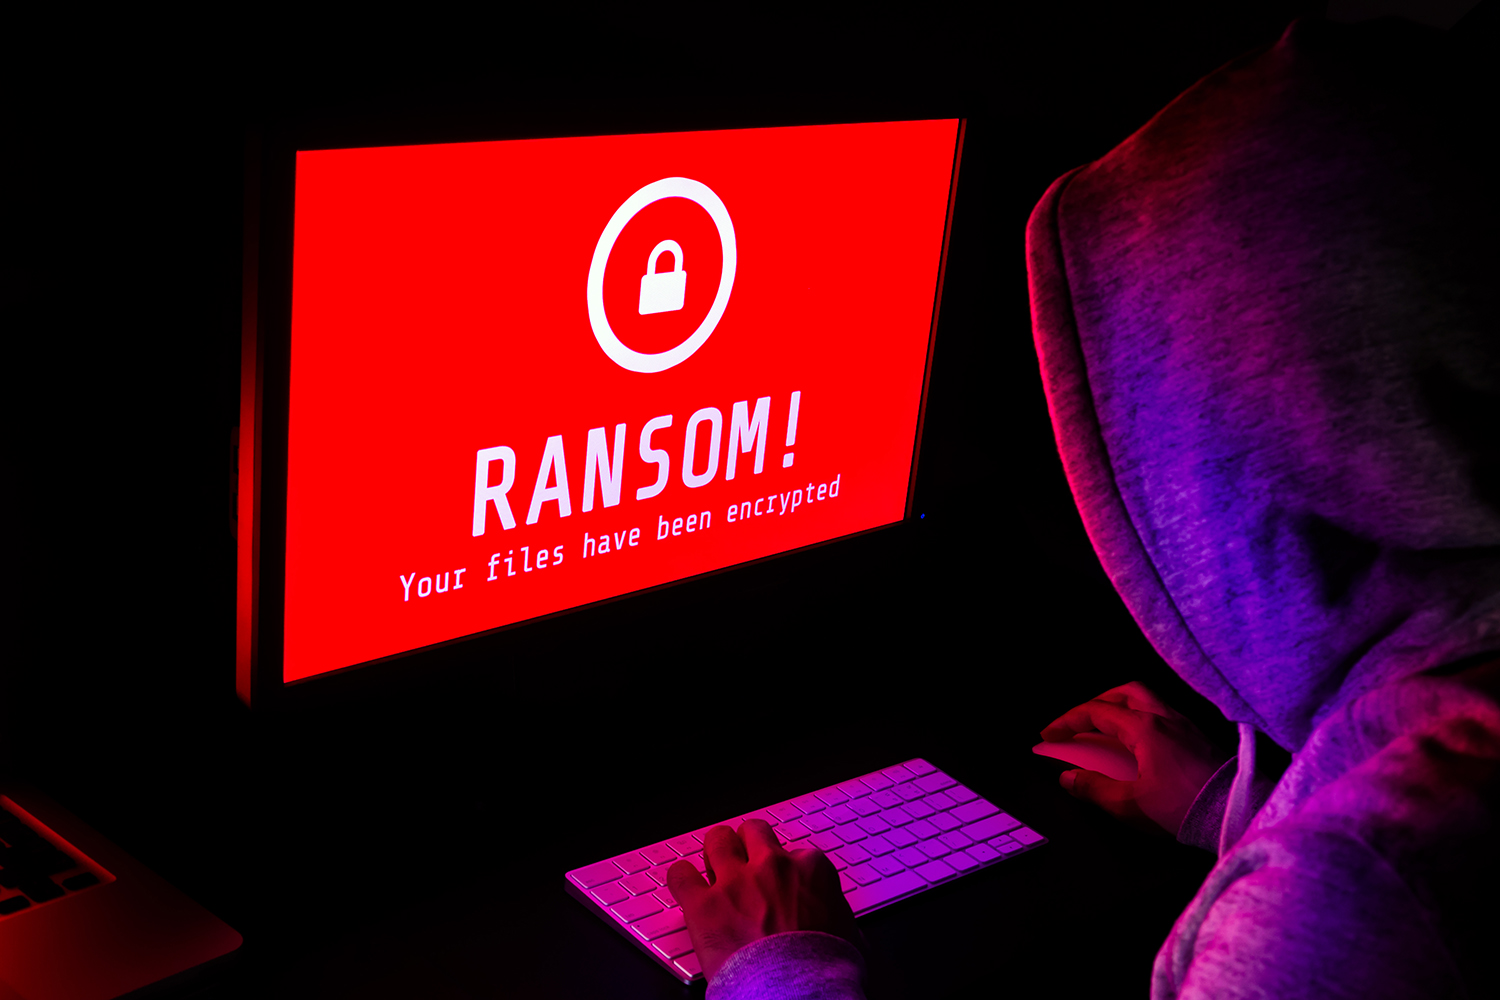 un hacker lleva a cabo un ataque de ransomware